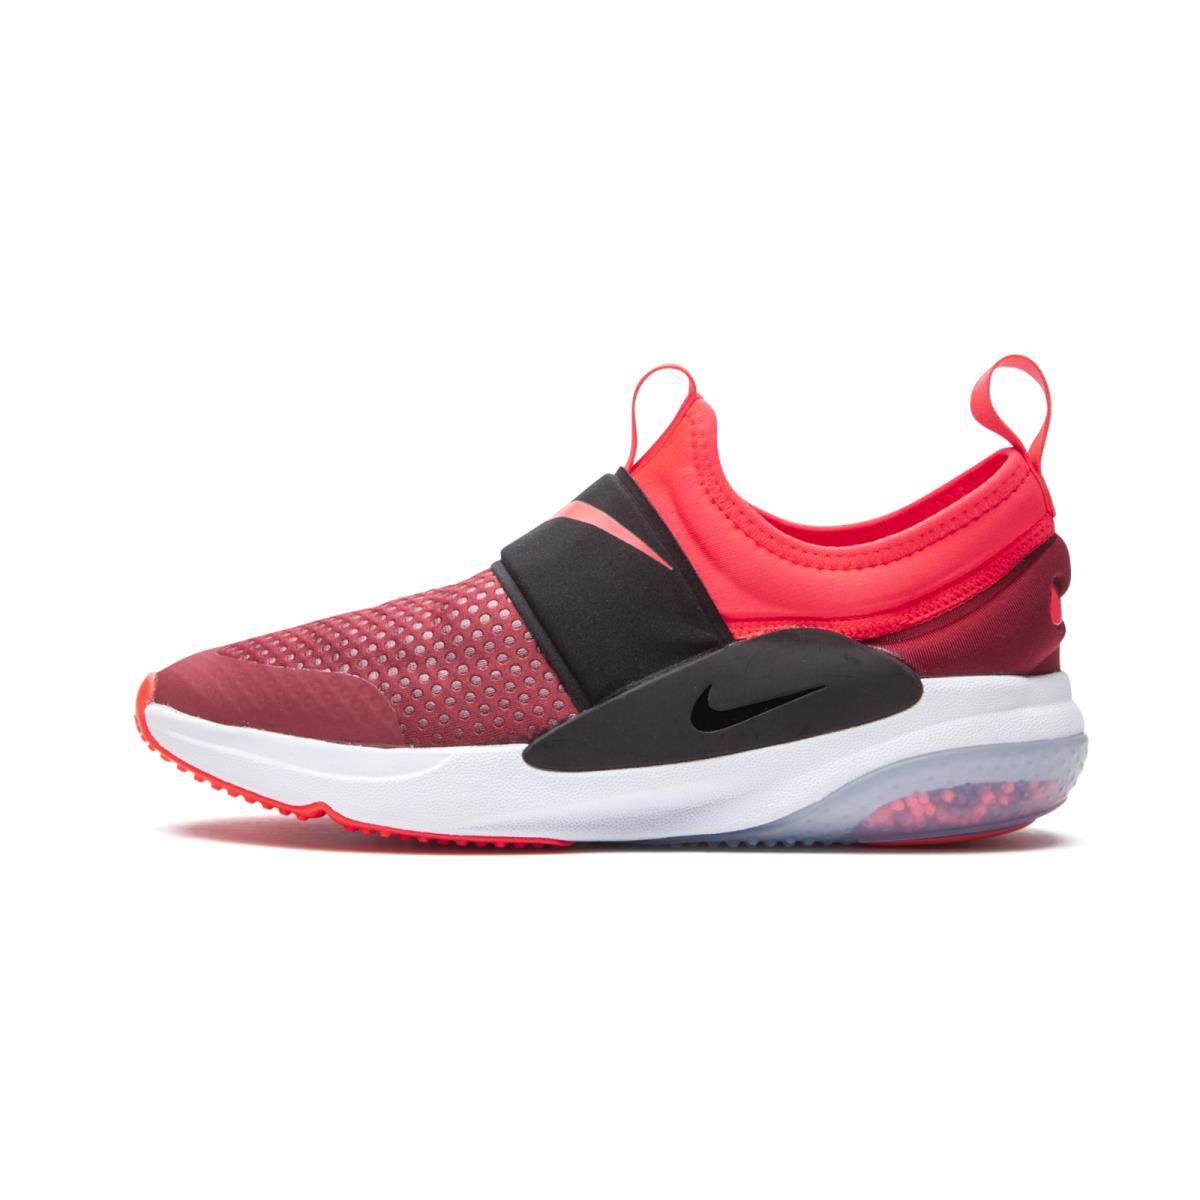 Nike shoes Joyride Nova - Team Red/Red Orbit-Black 1